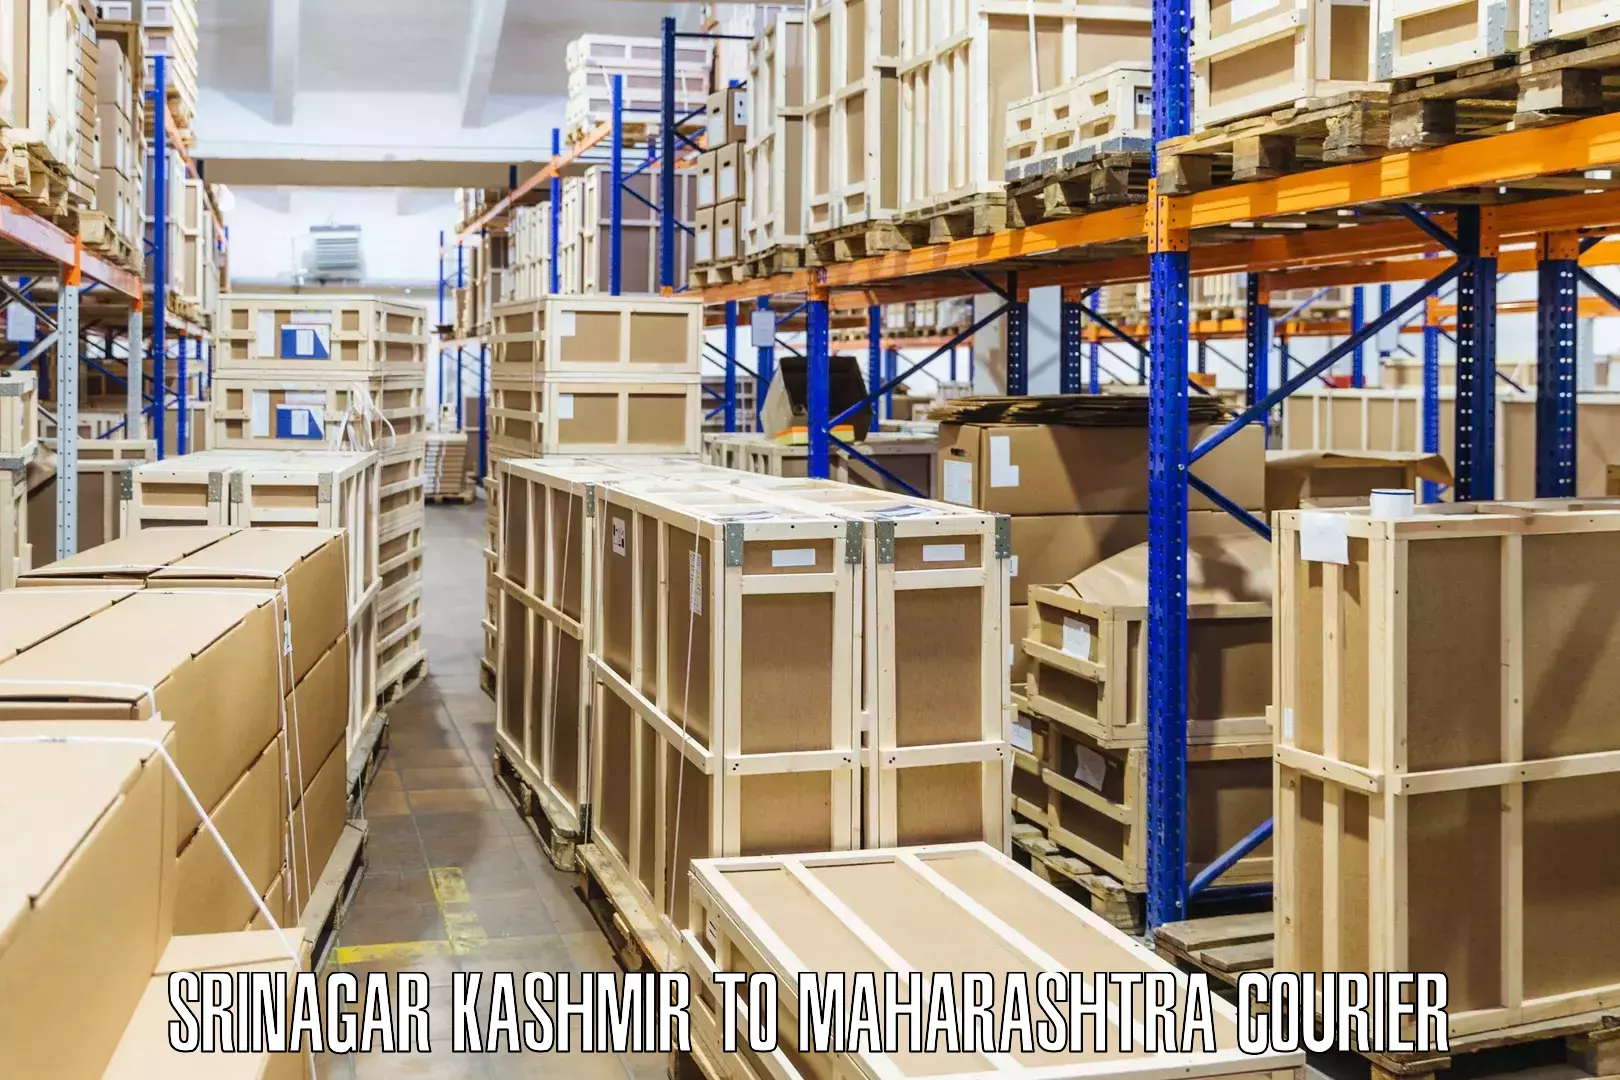 Reliable logistics providers Srinagar Kashmir to Vadgaon